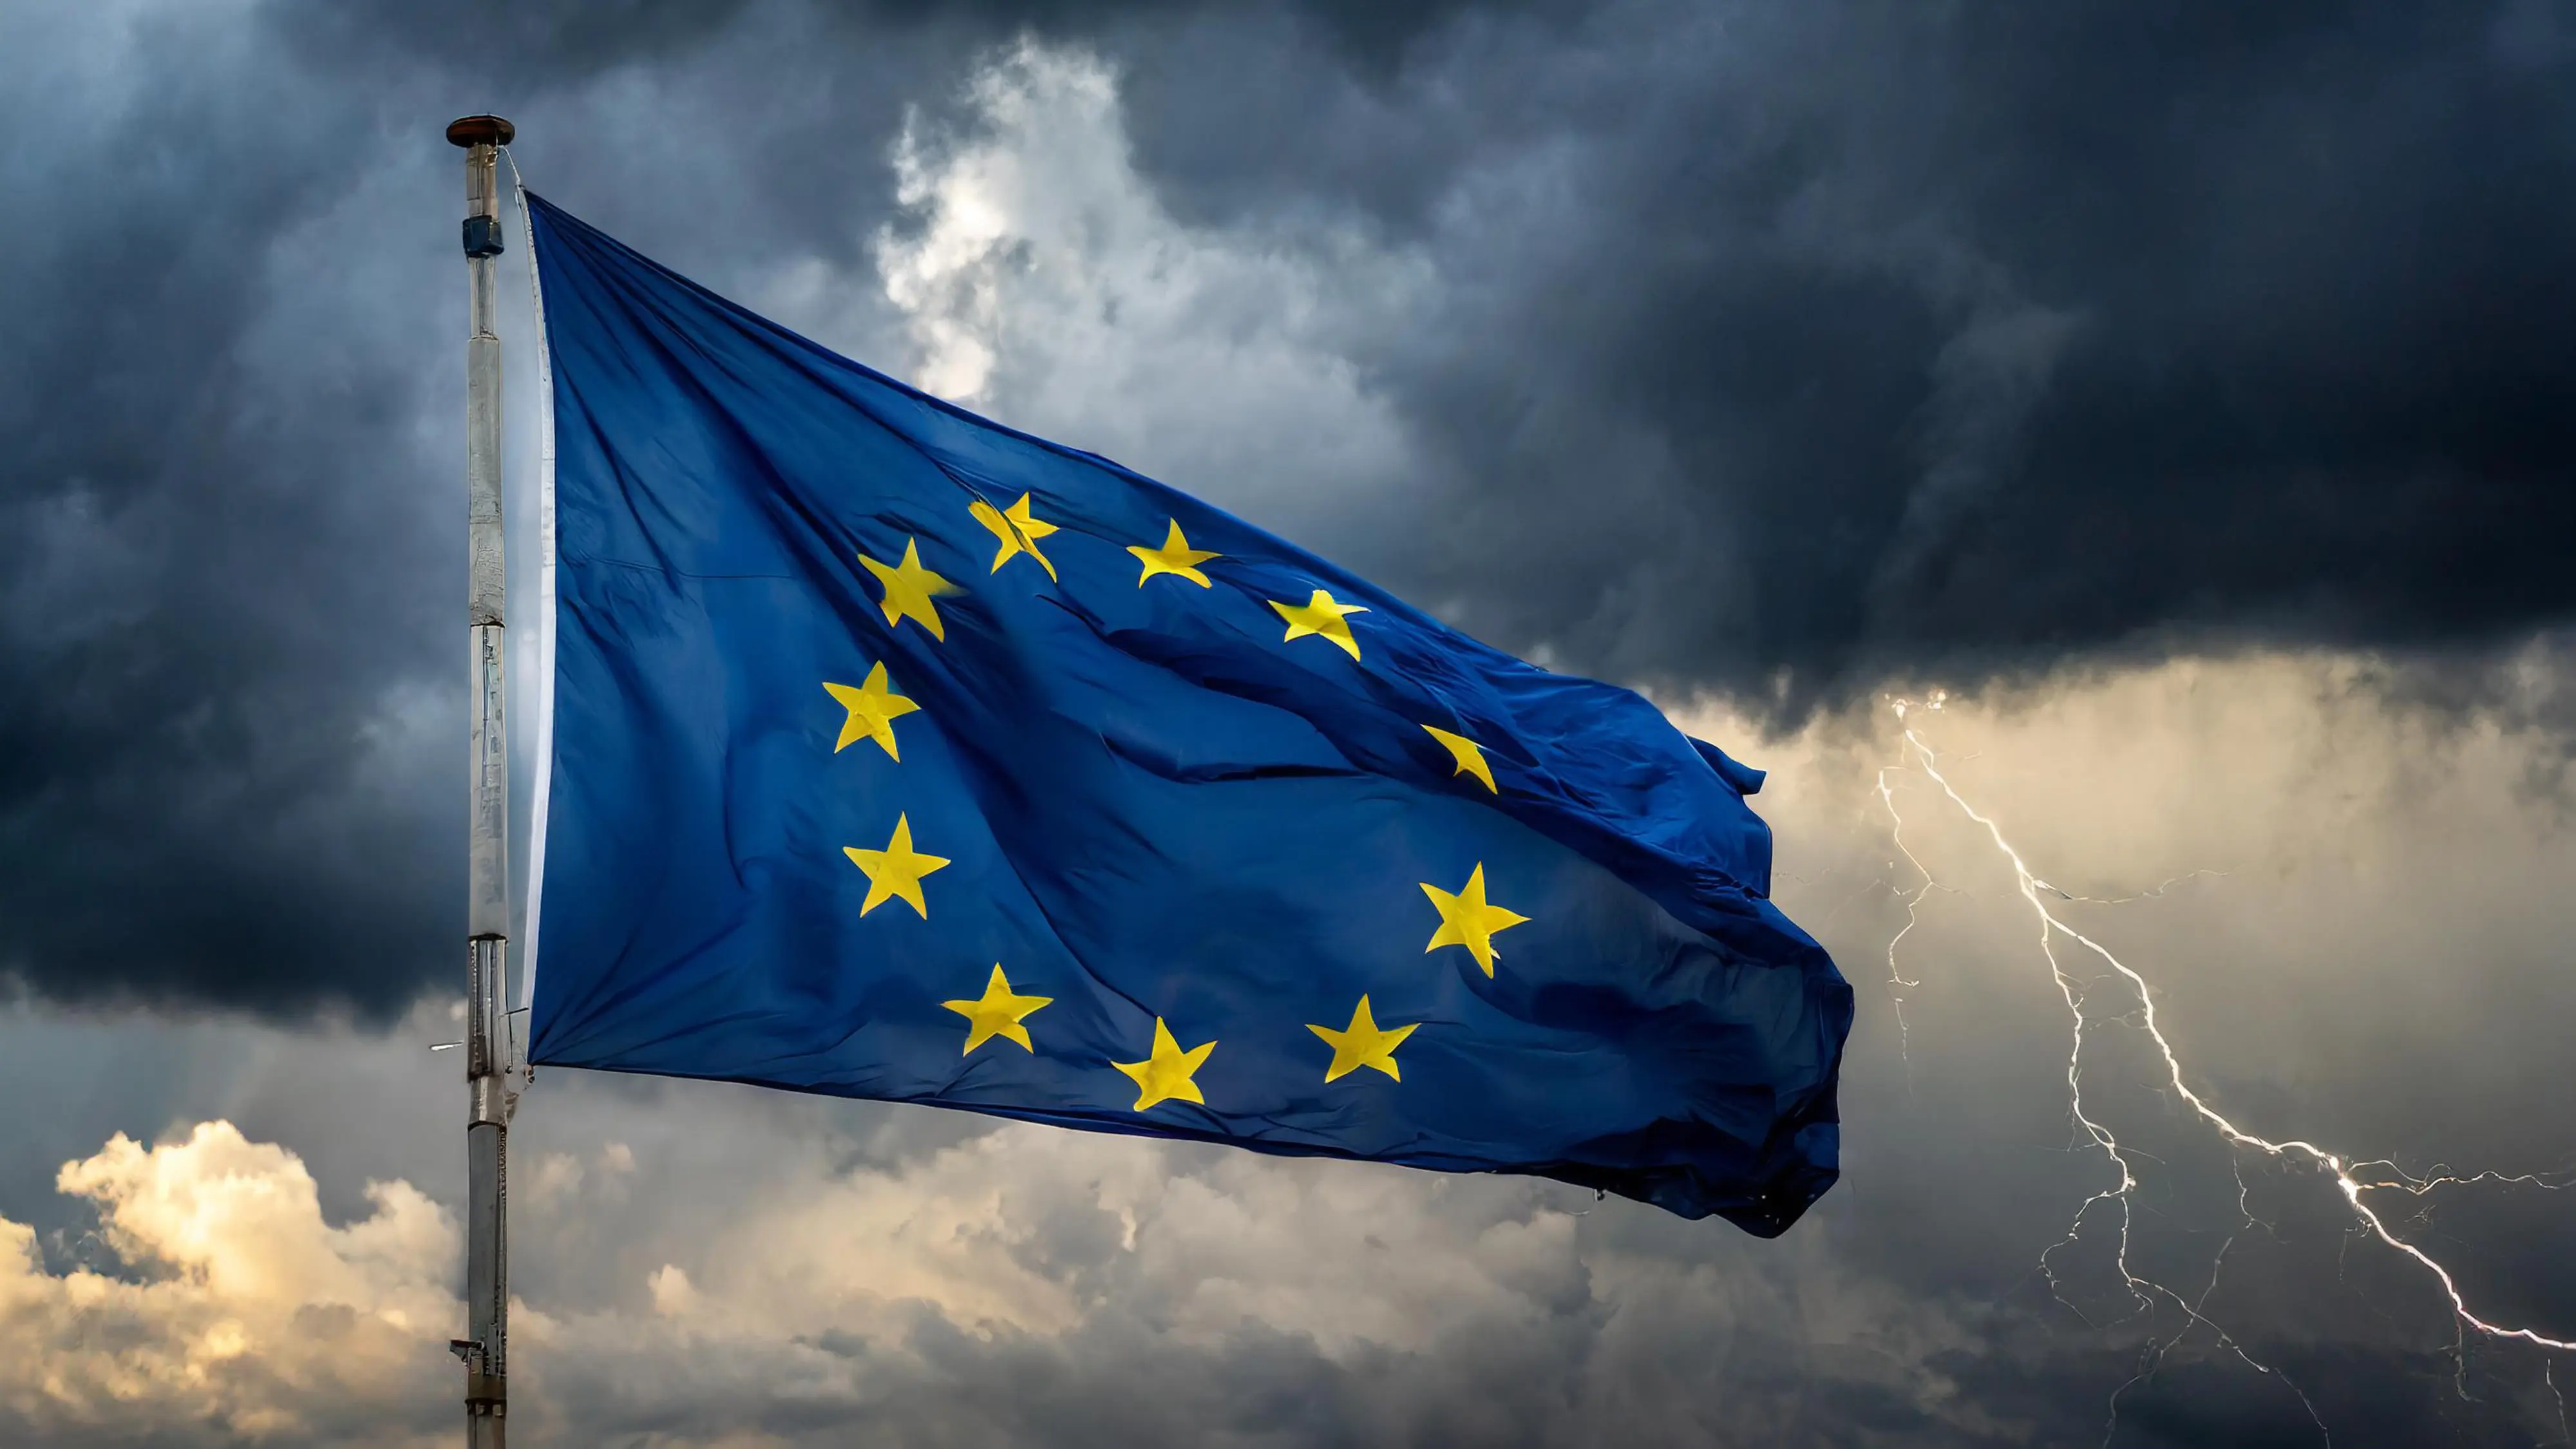 Die Fahne der EU flattert im Wind, isoliert, gegen dunkle düstere Wolken